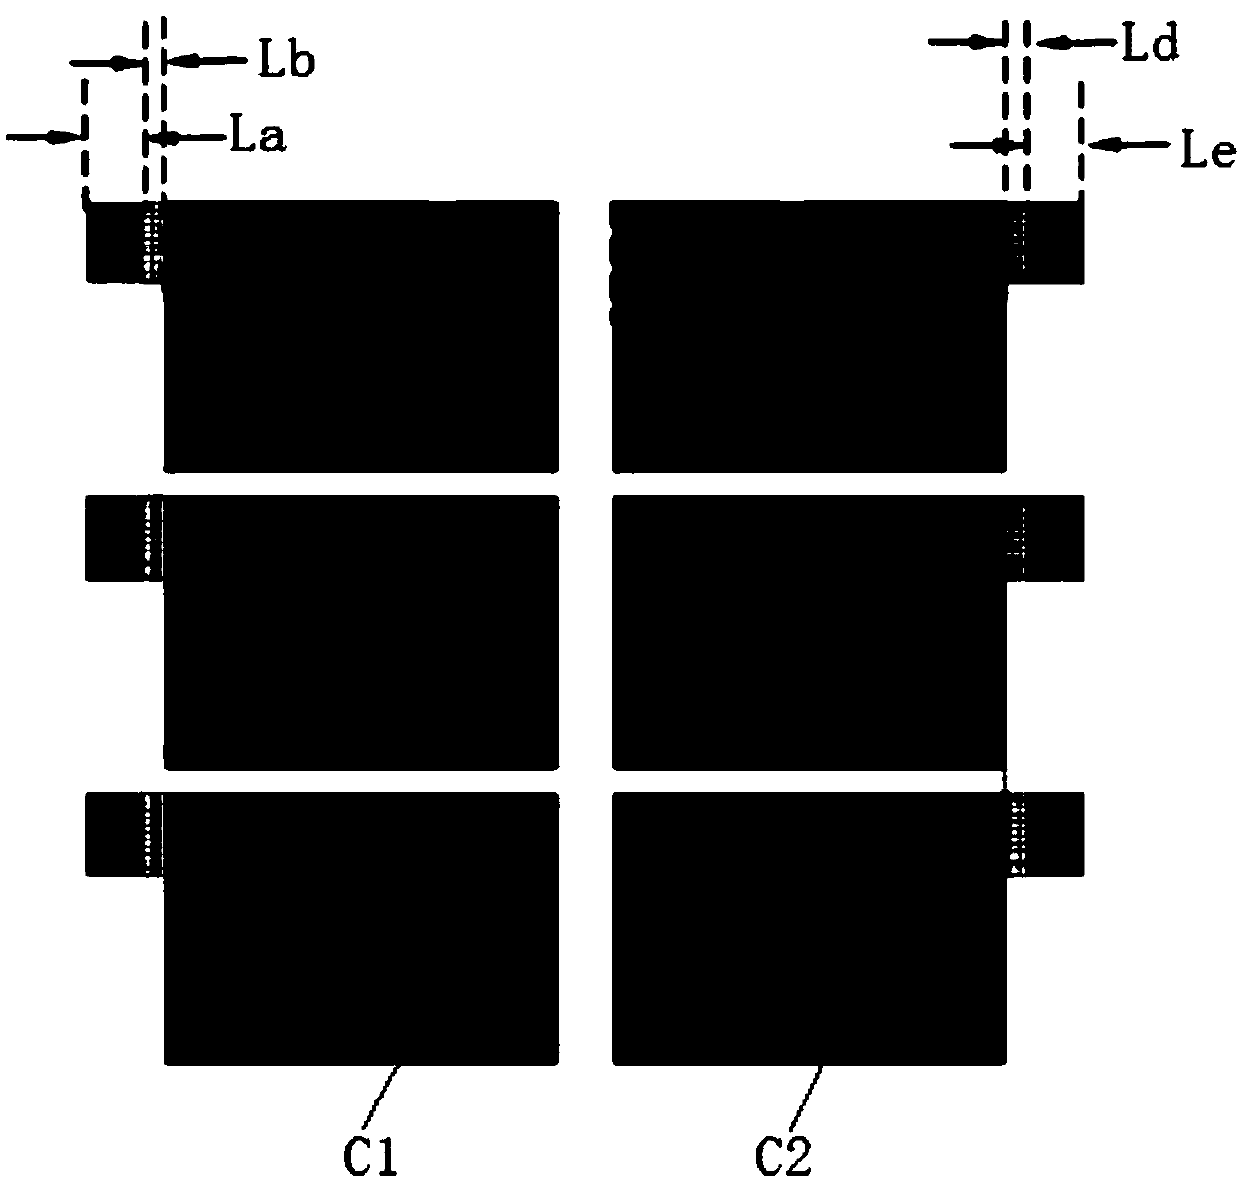 Coating design method for lowering battery short circuit rate